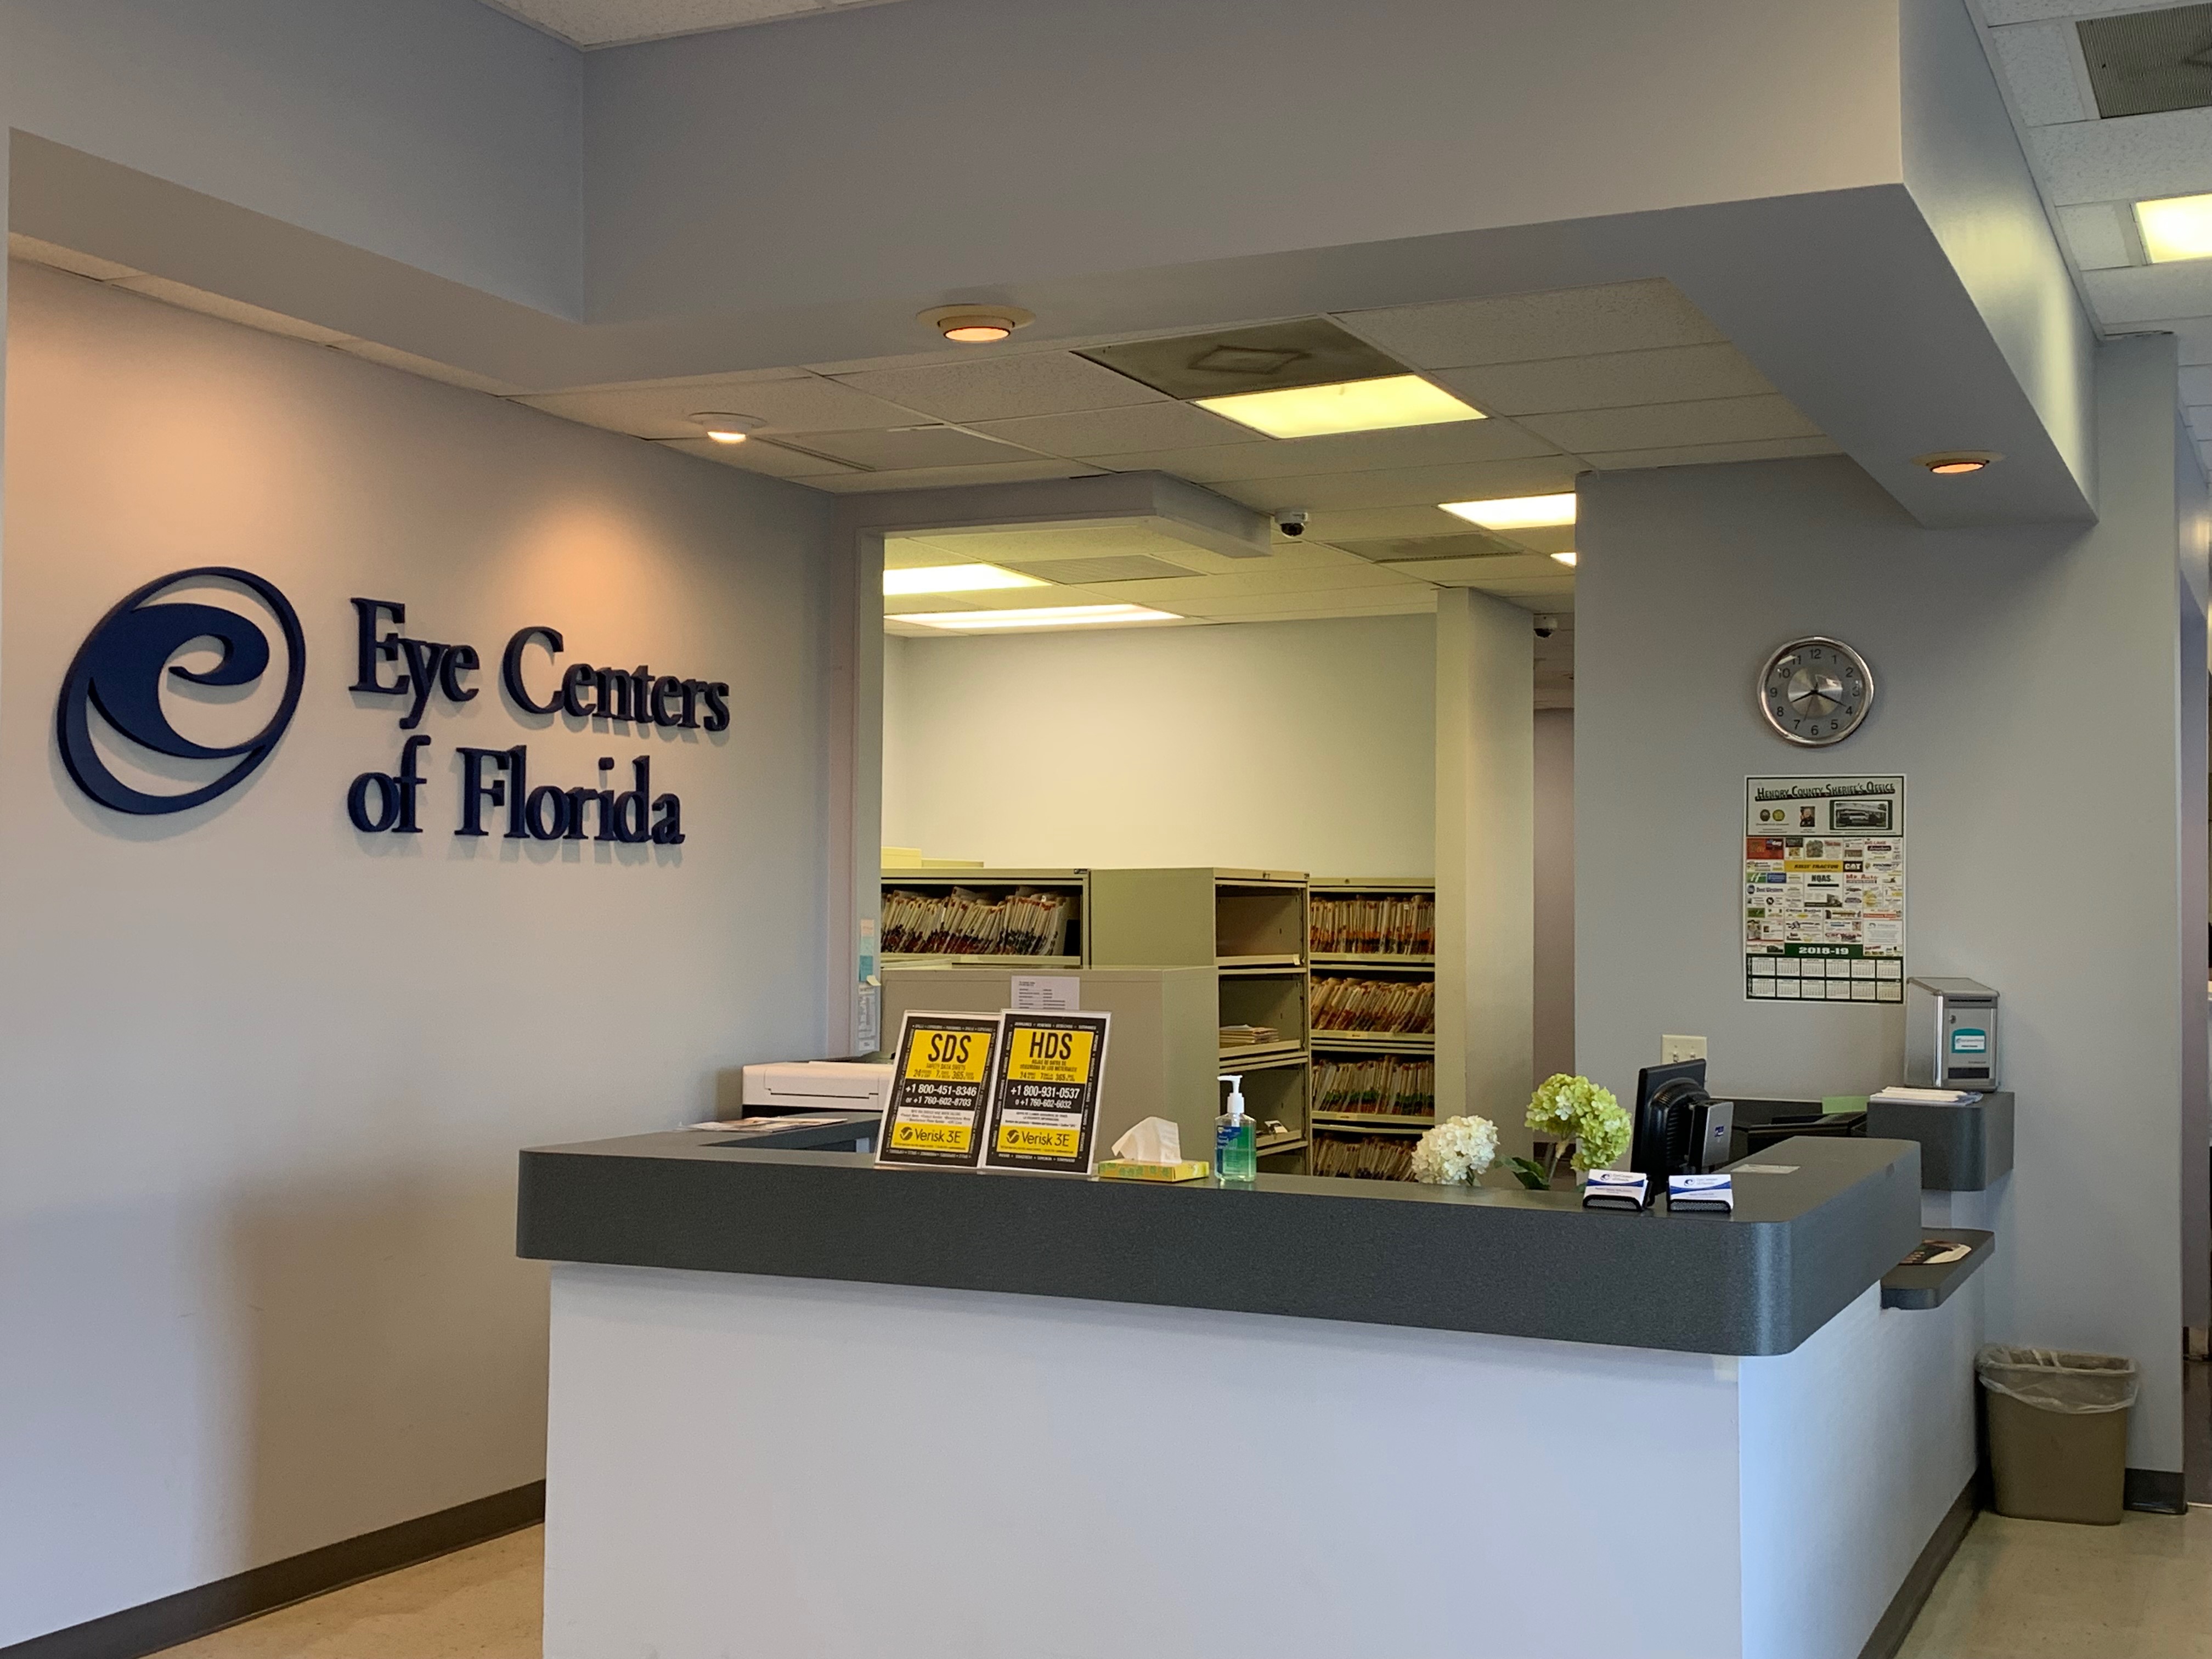 Image 5 | Eye Centers of Florida - Clewiston